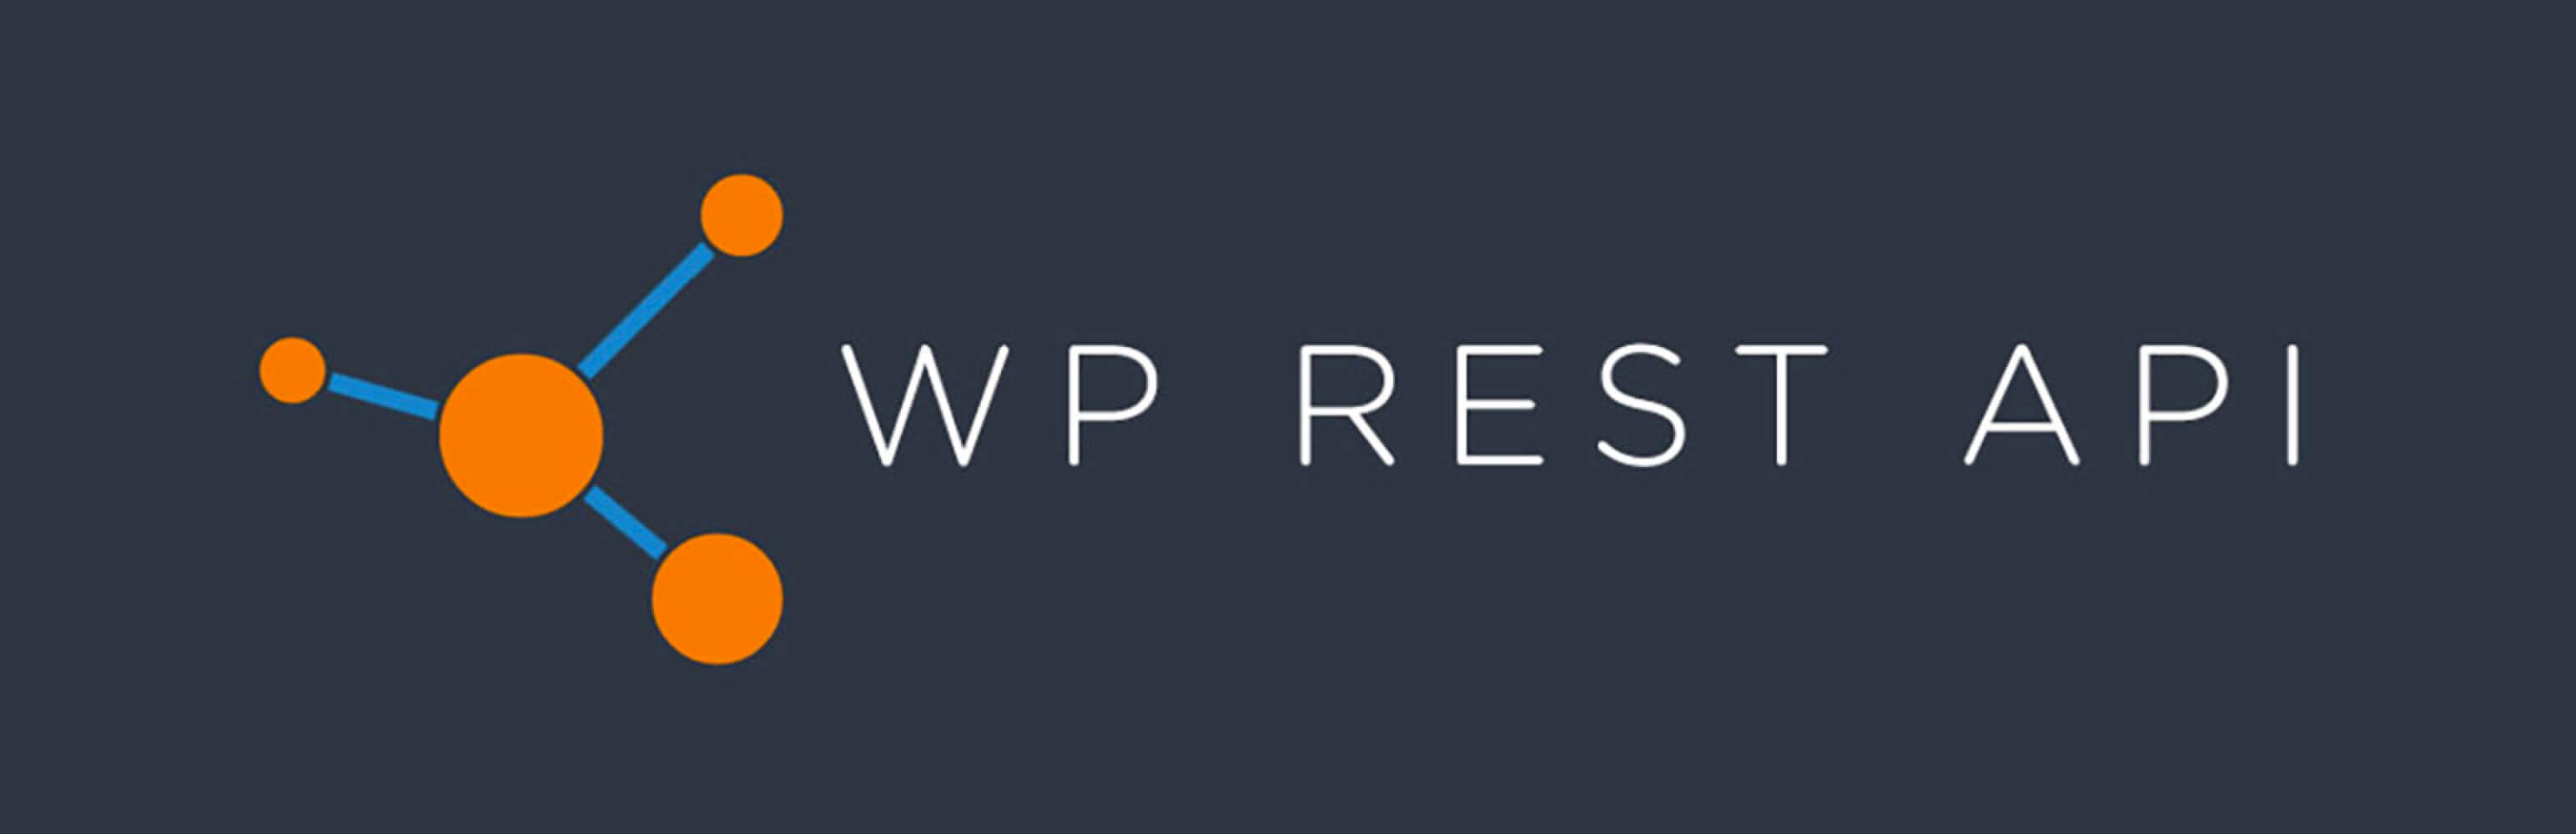 WP REST API